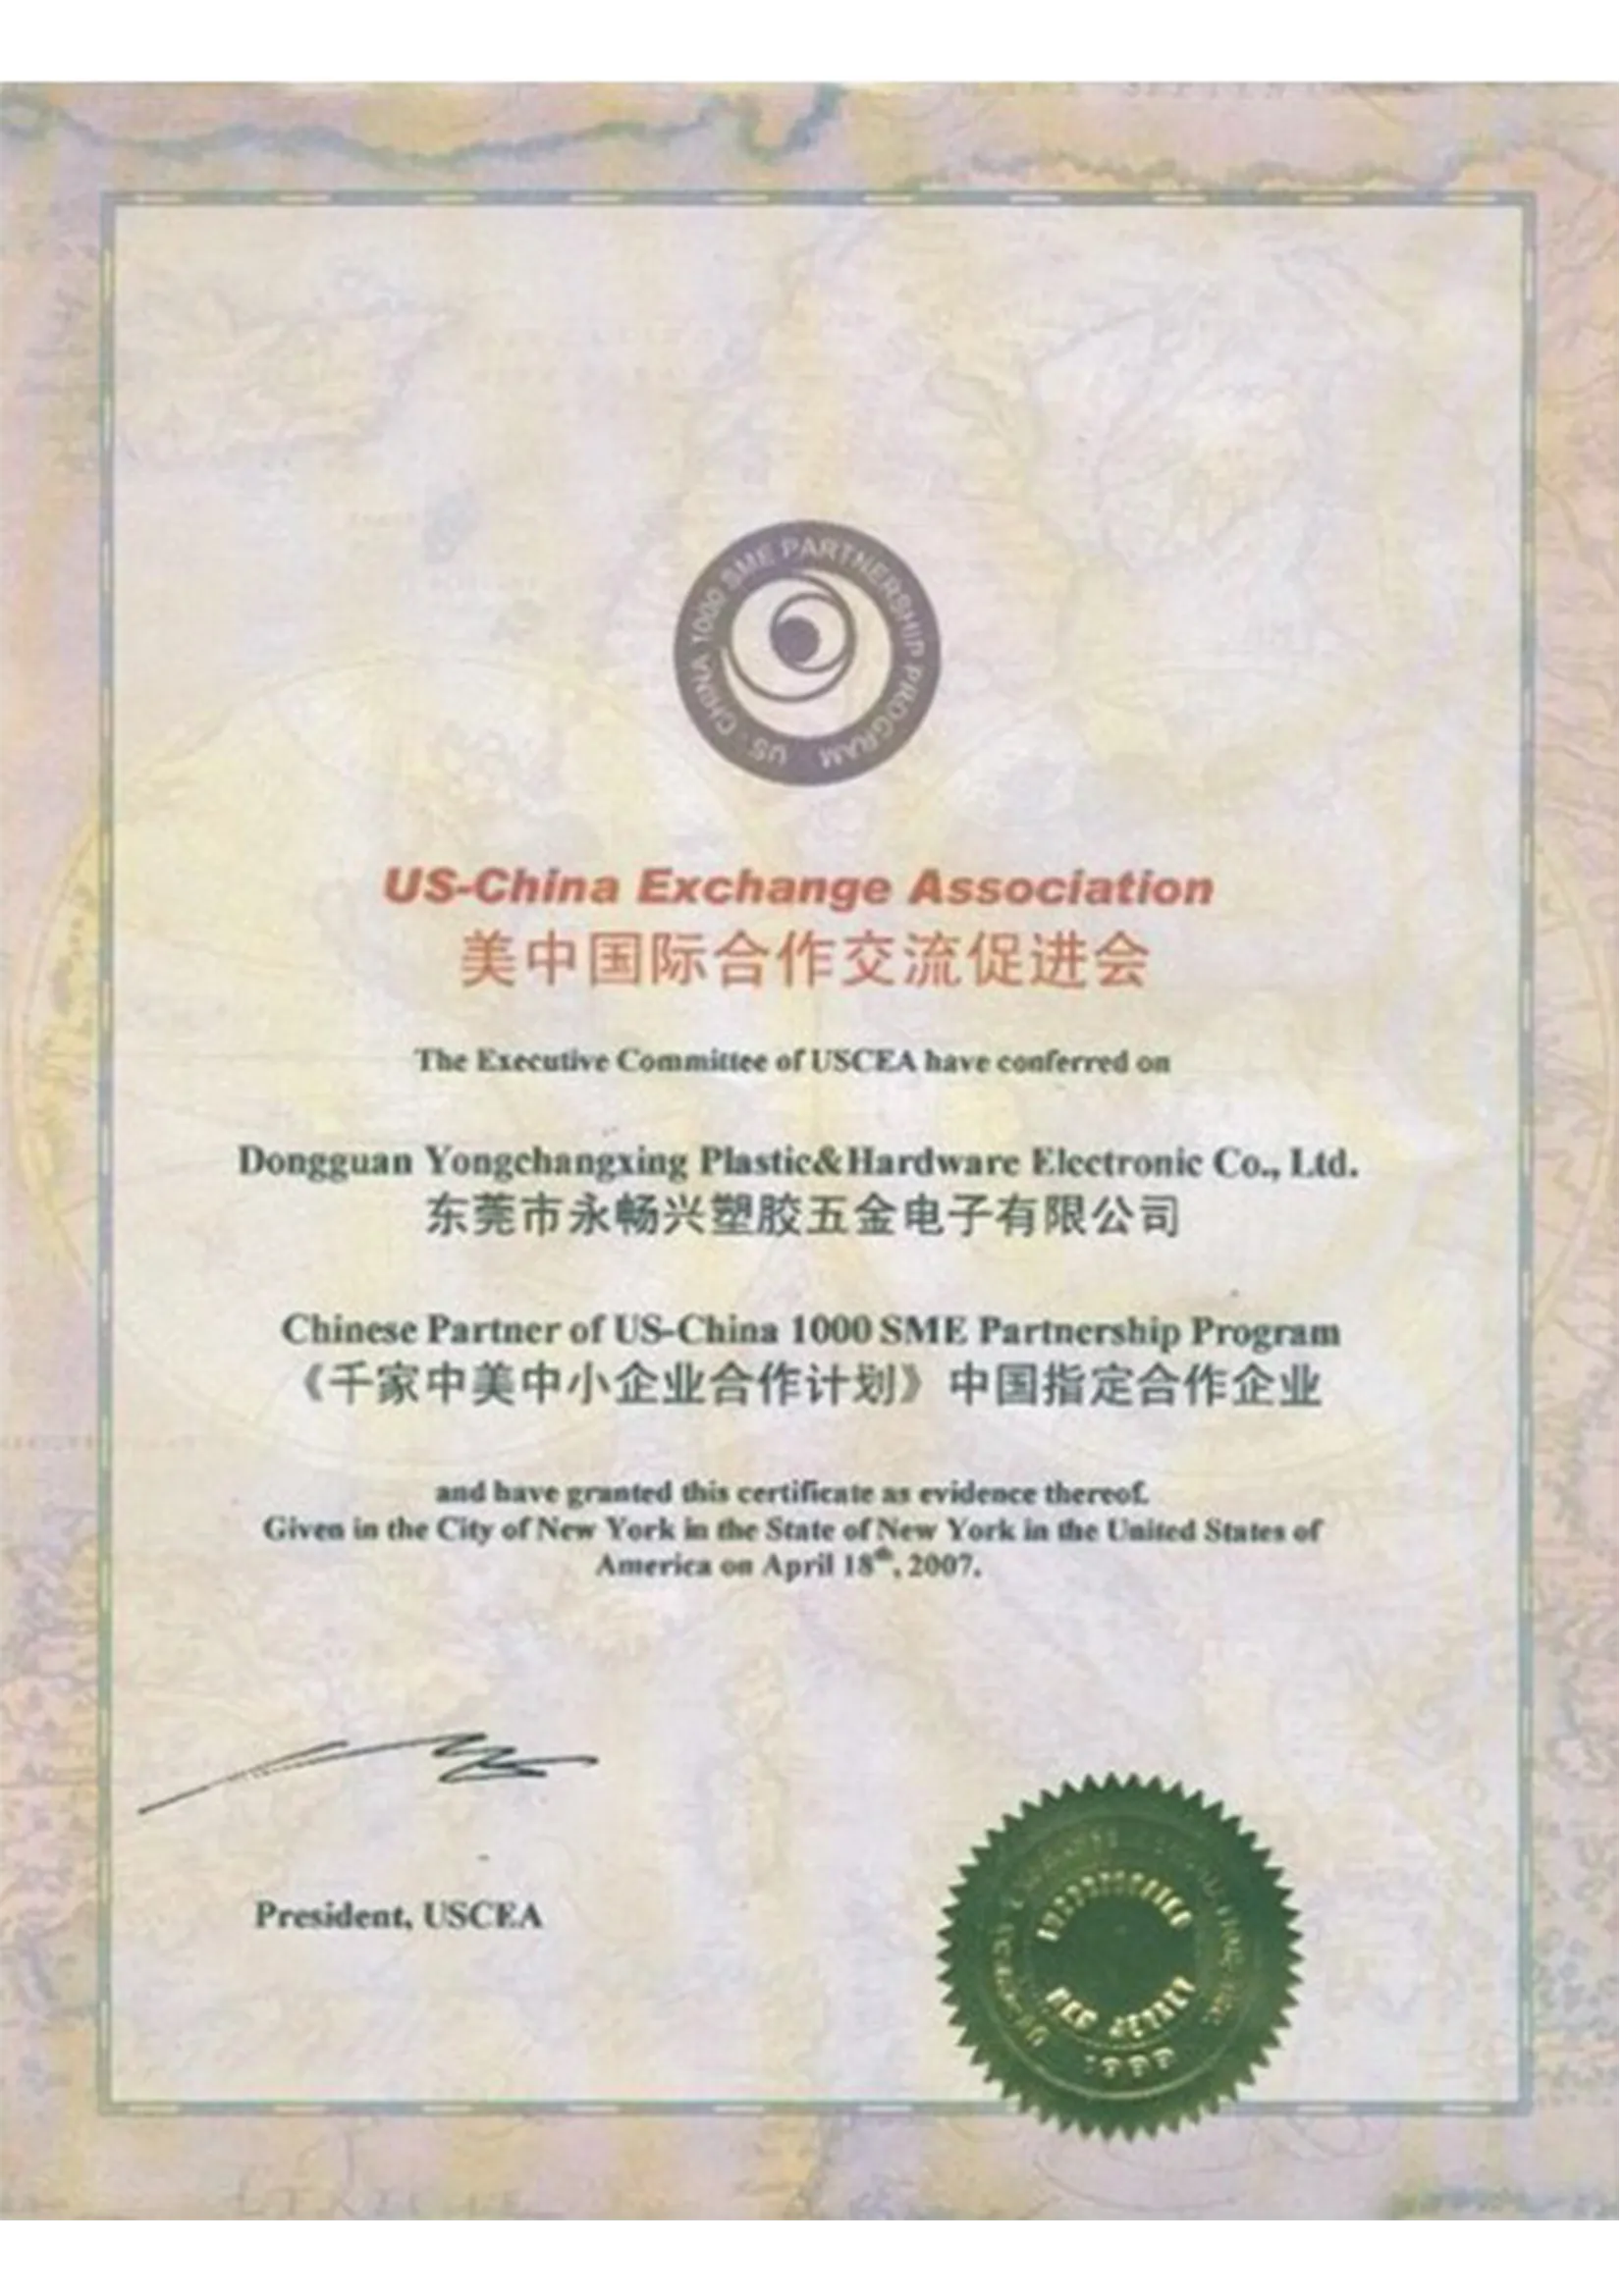 US-China Exchange Association